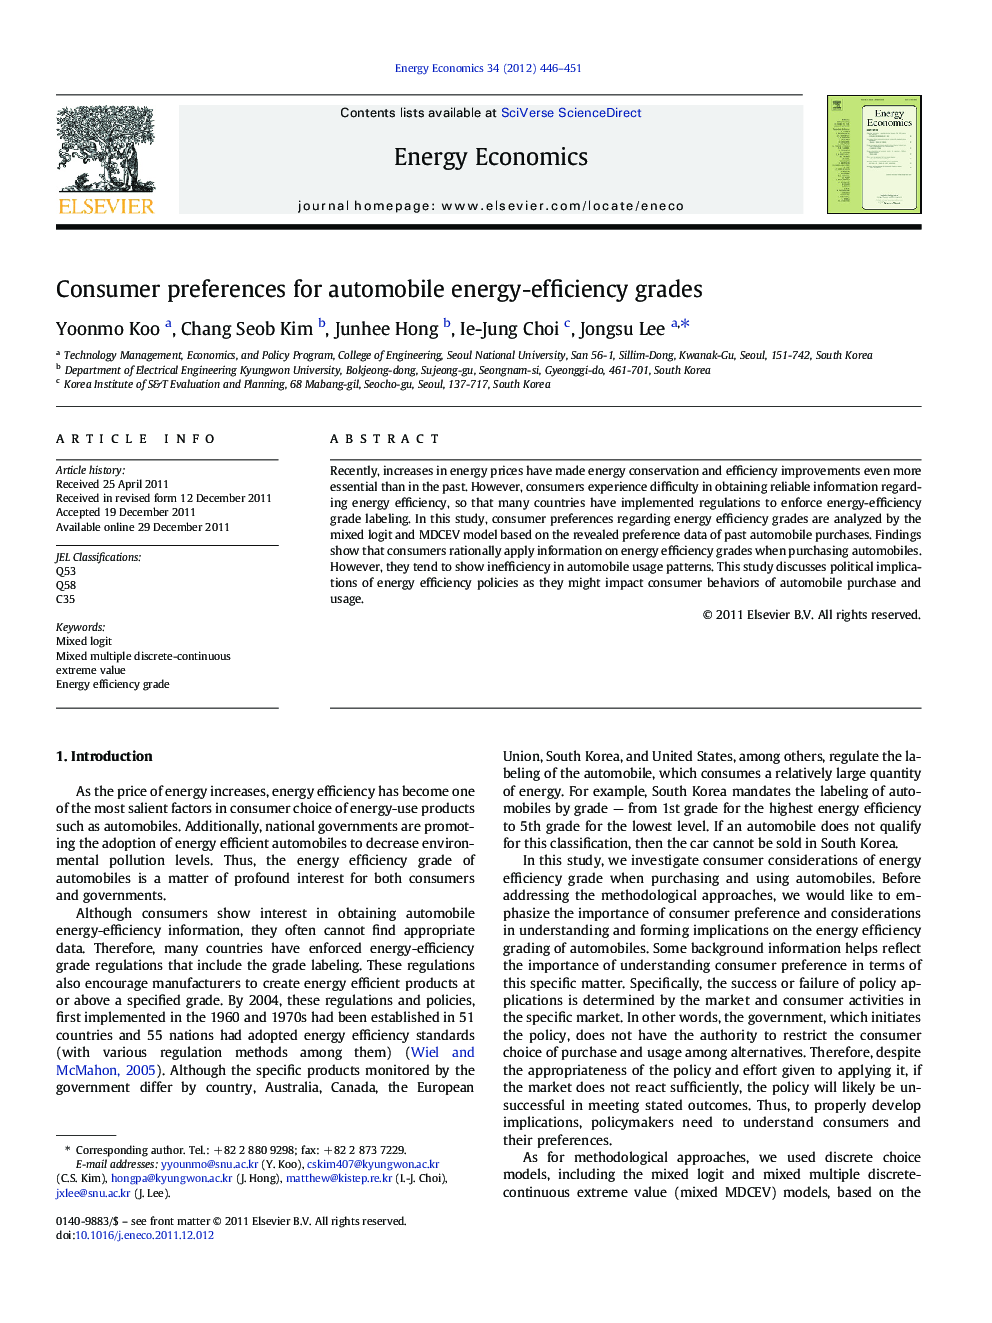 Consumer preferences for automobile energy-efficiency grades